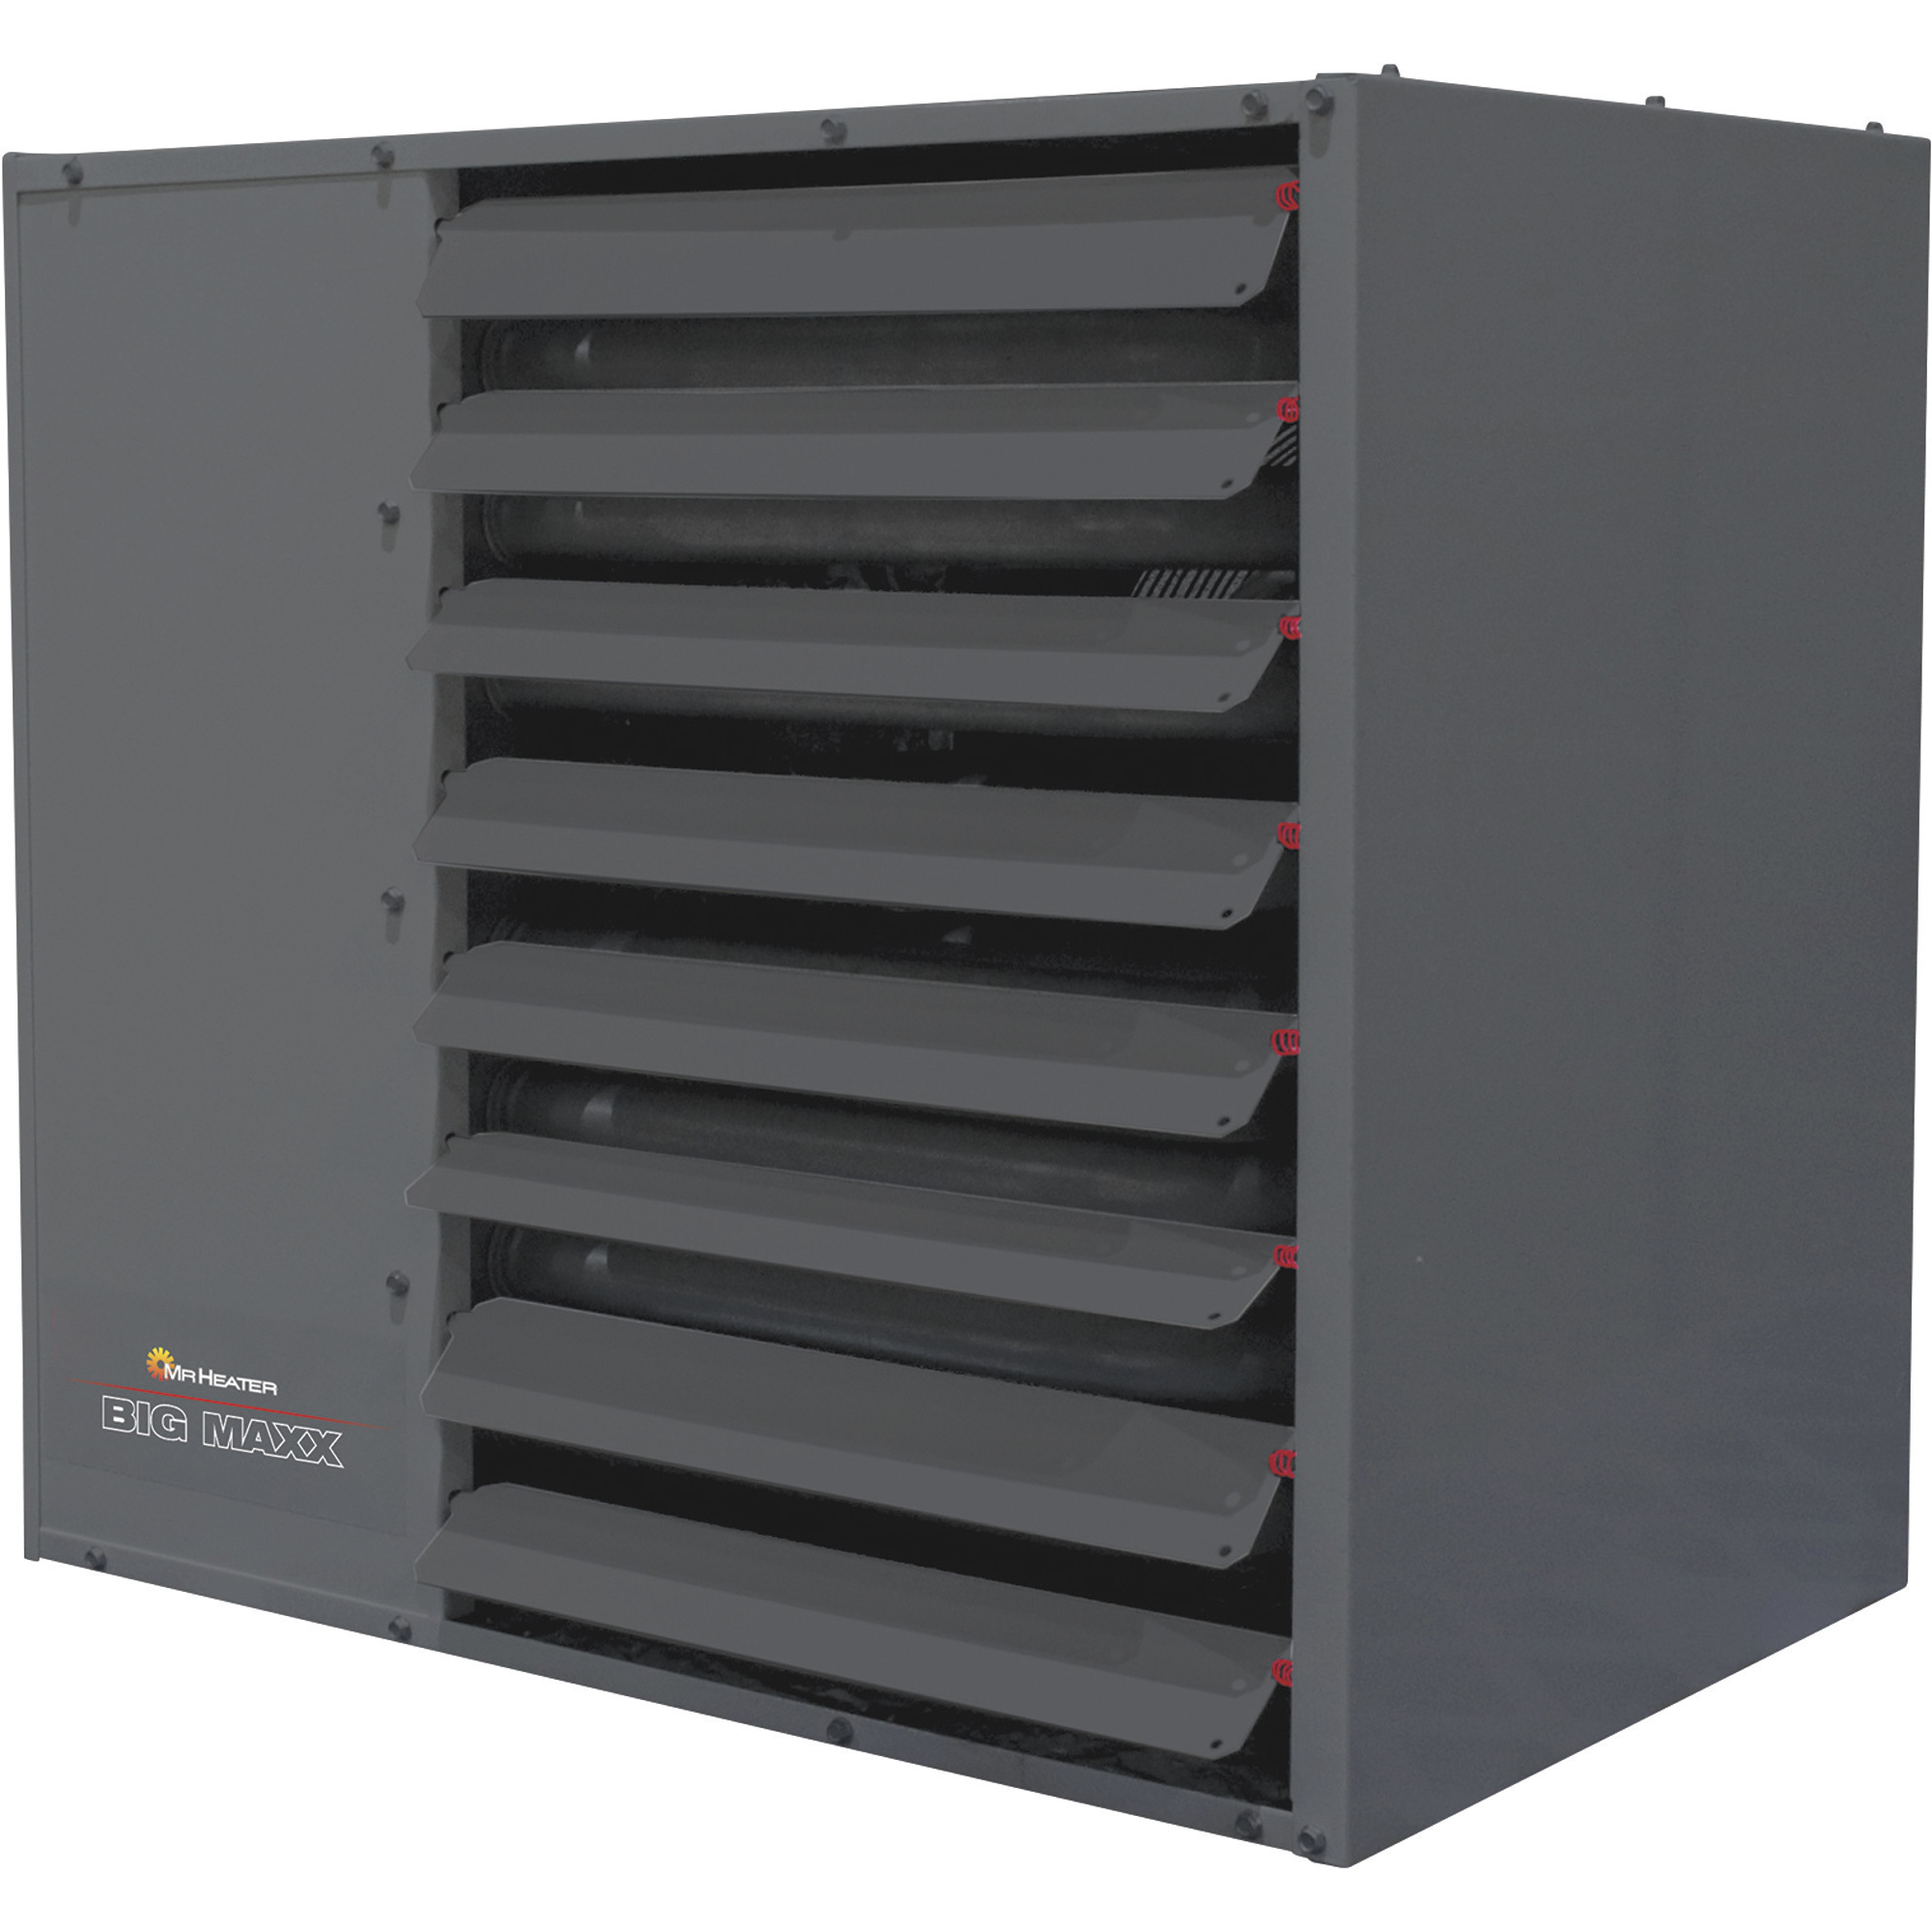 Mr. Heater Big Maxx 250,000 BTU Natural Gas/LP High-Output Commercial Unit Heater — Model# MHU250 -  F263064